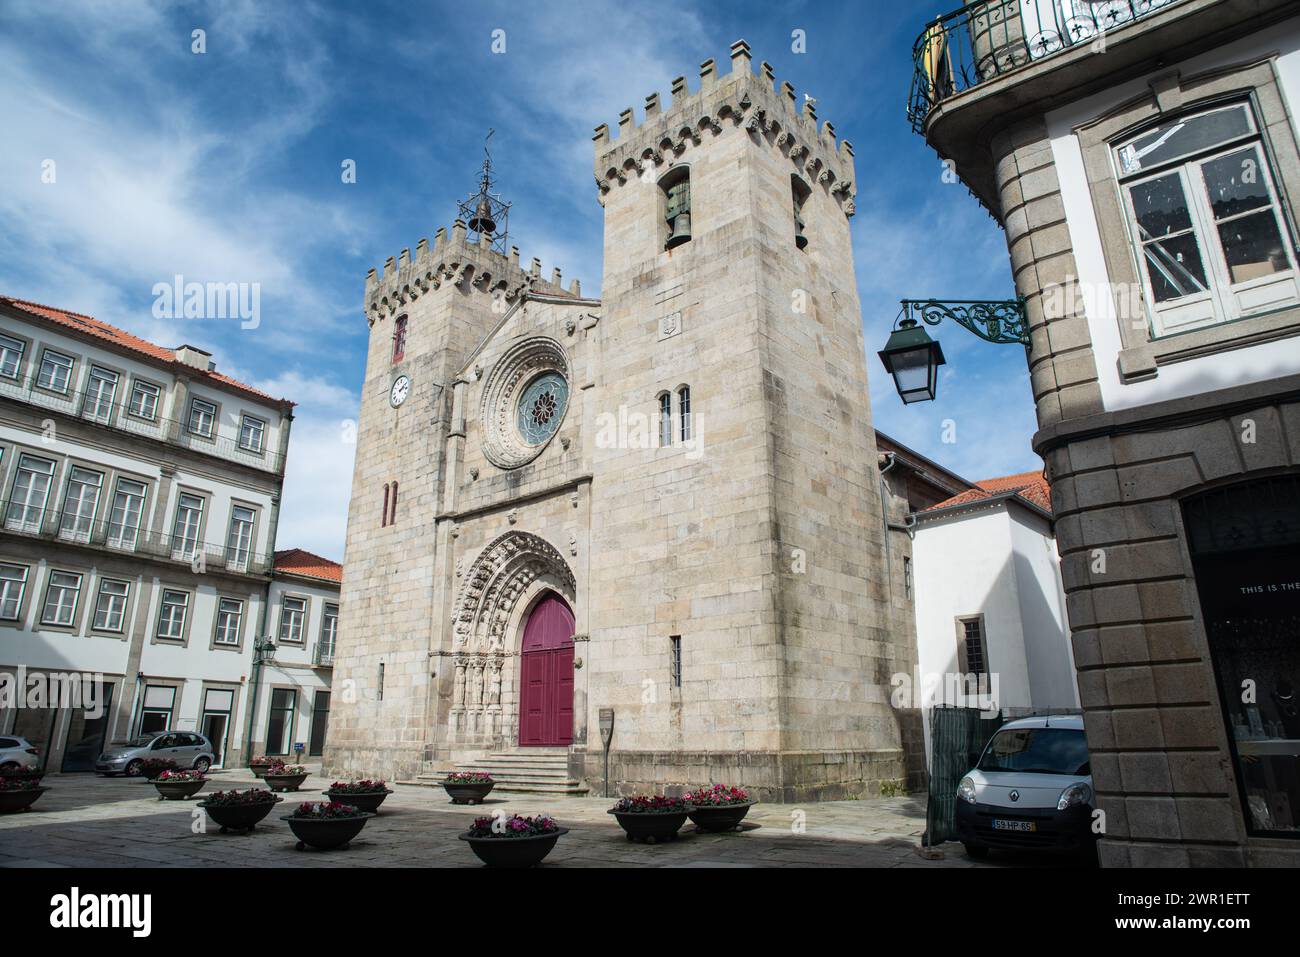 Sé Catedral de Viana do Castelo, Portugal Banque D'Images